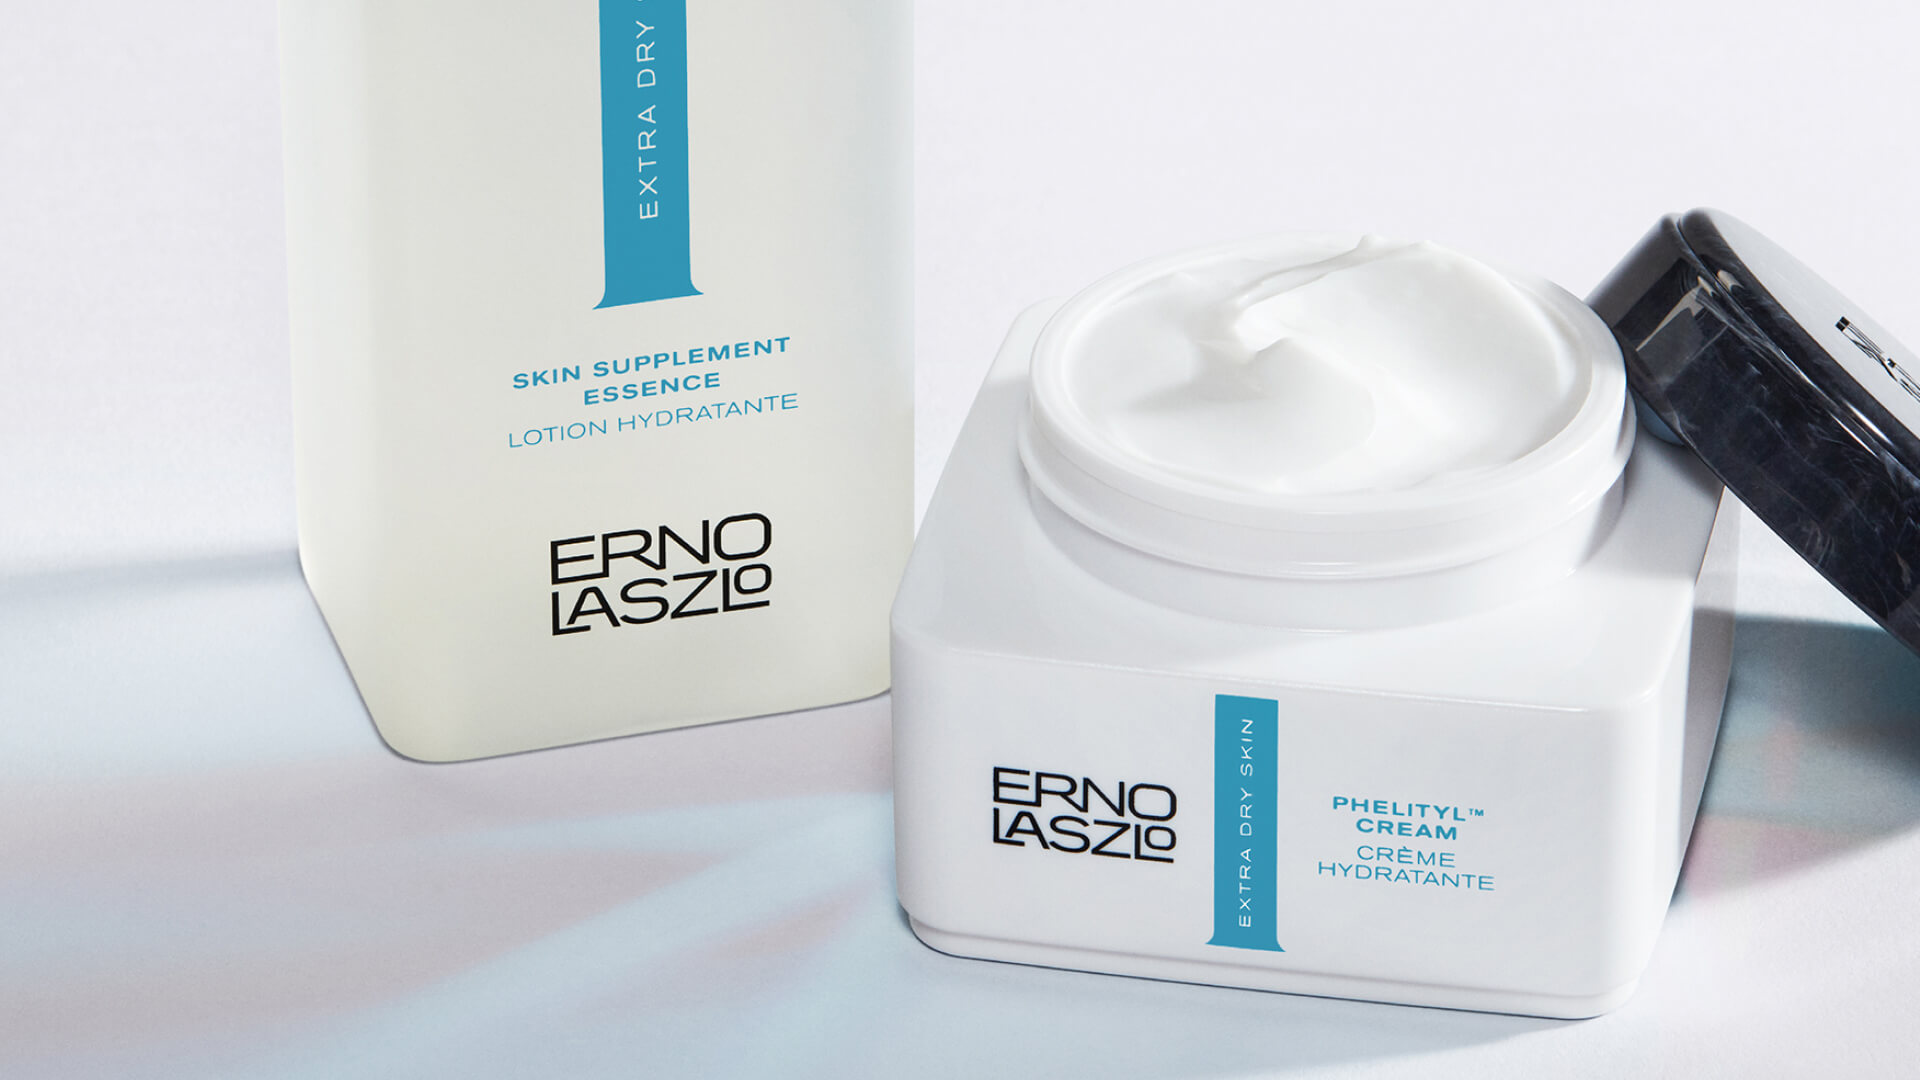 Erno Laszlo brand identity packaging